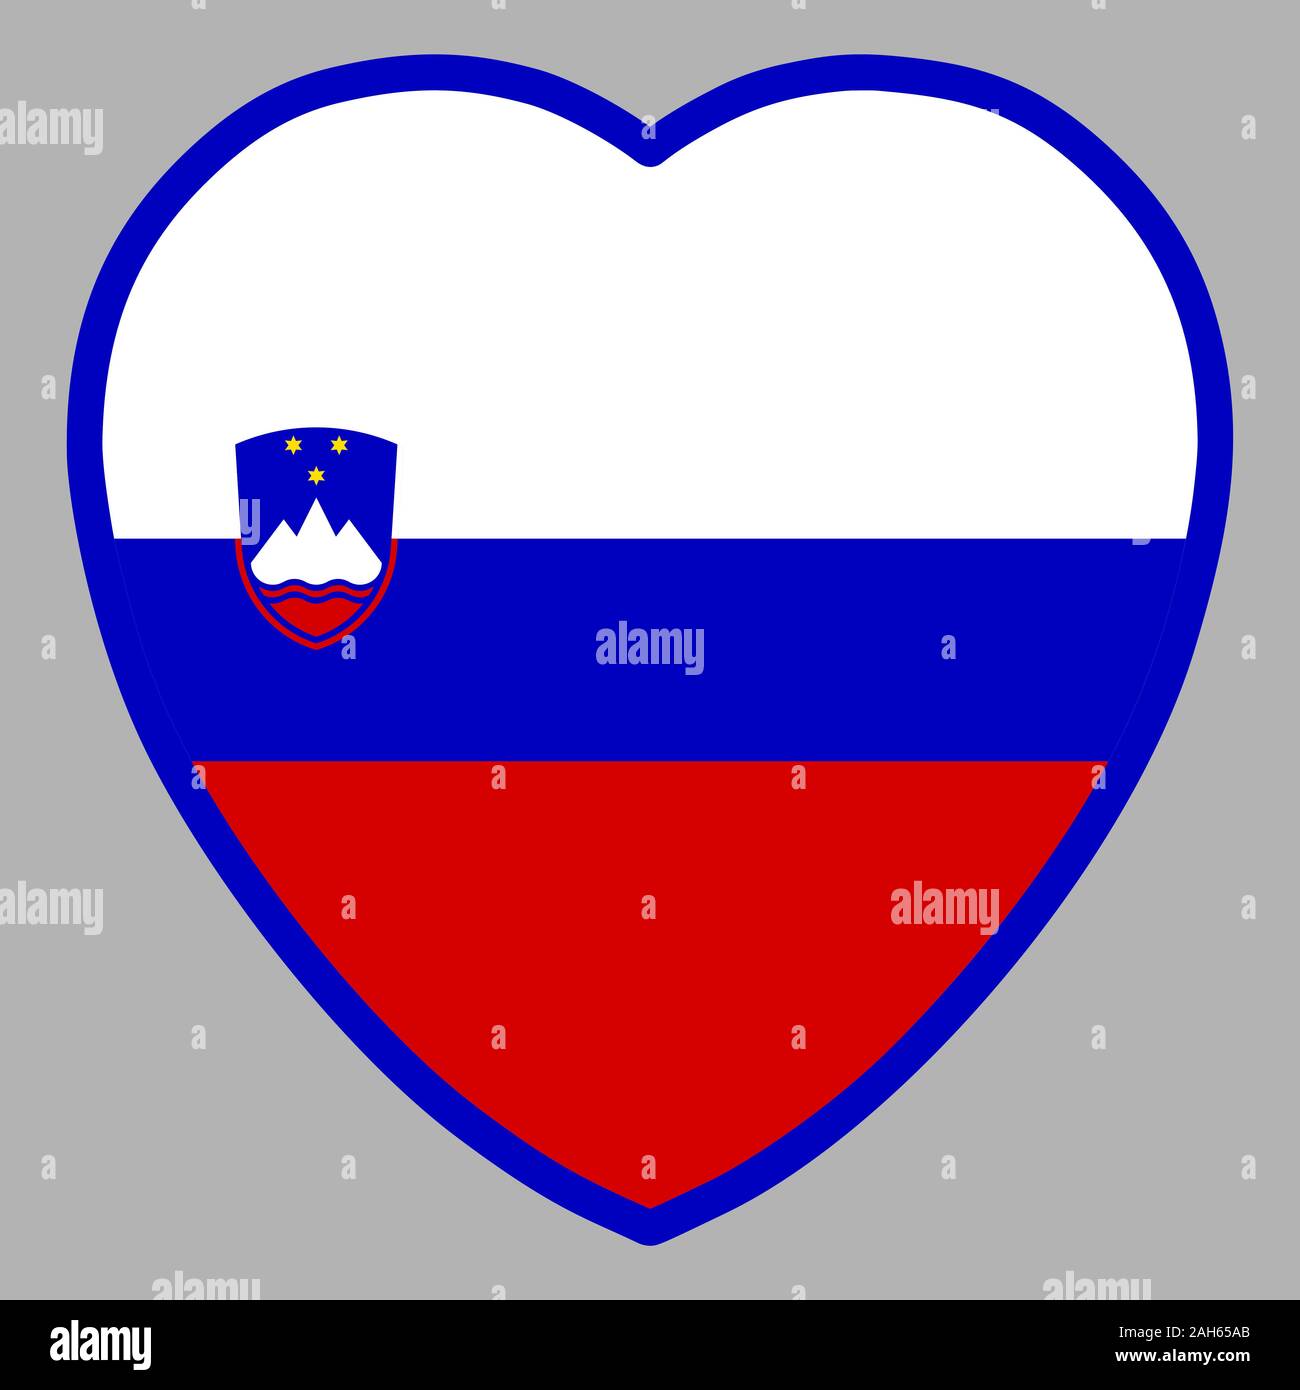 Slovenia Flag In Heart Shape Vector Stock Vector